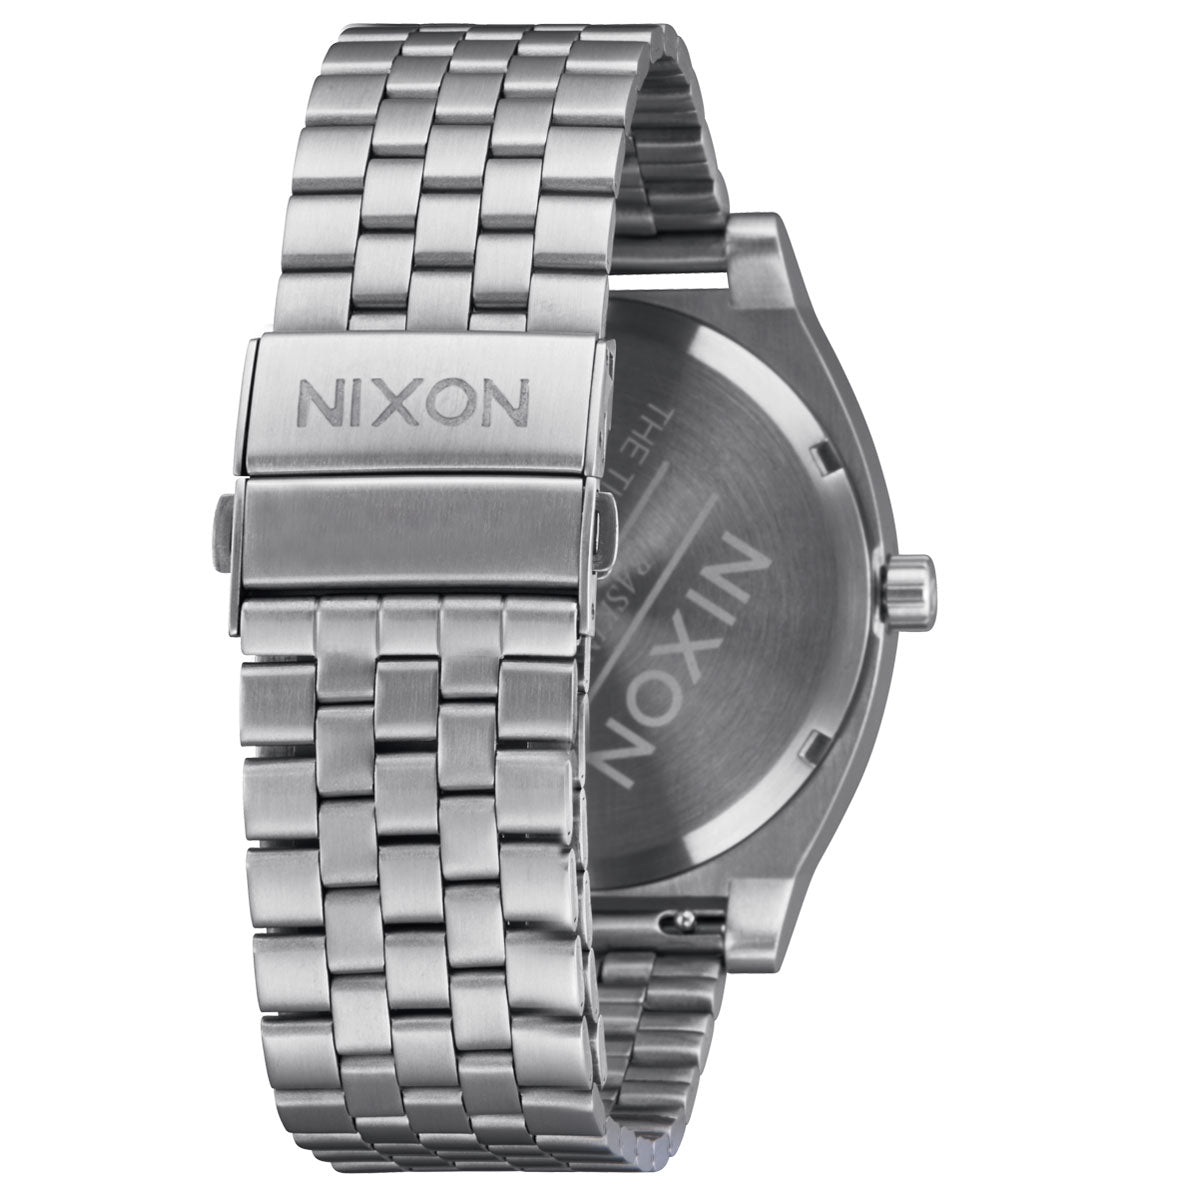 Nixon Time Teller Solar Watch - Silver/Jade Sunray image 2